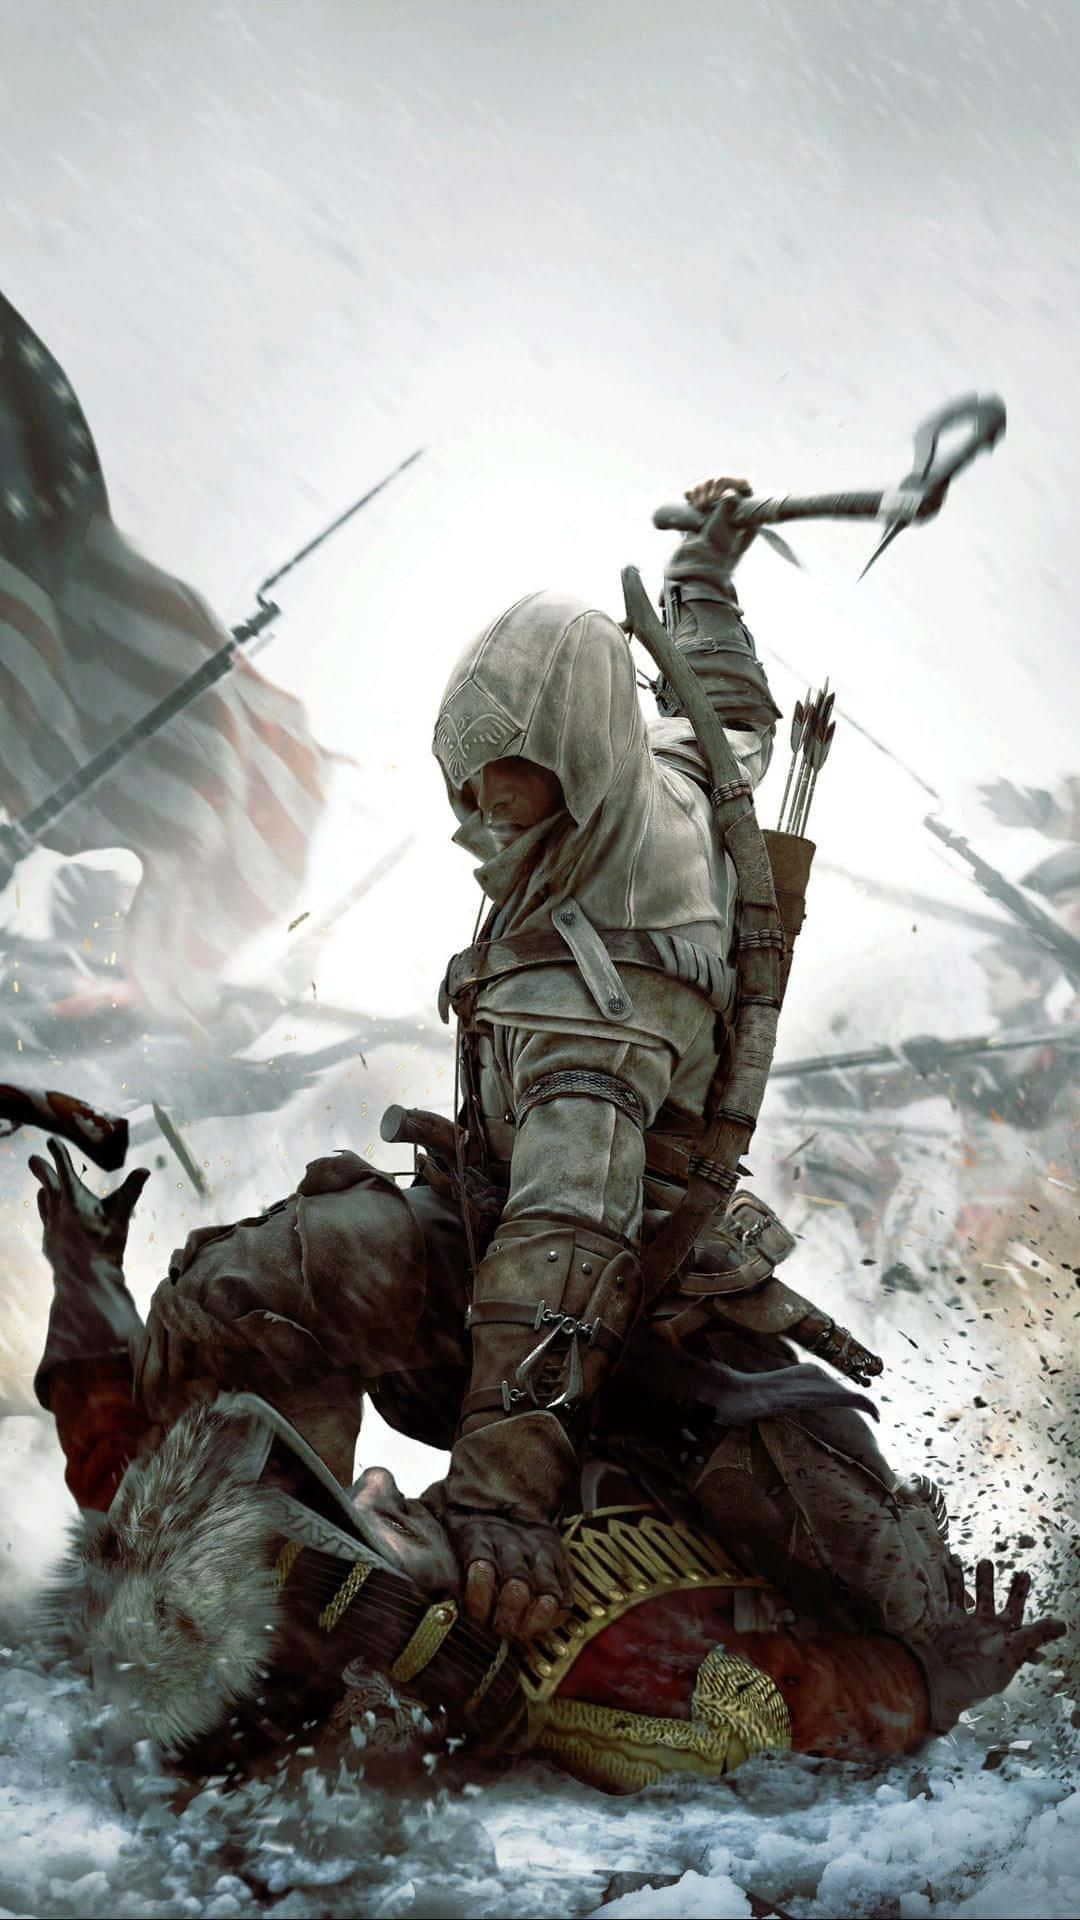 Assassin's Creed Iii - Hd Wallpaper Wallpaper